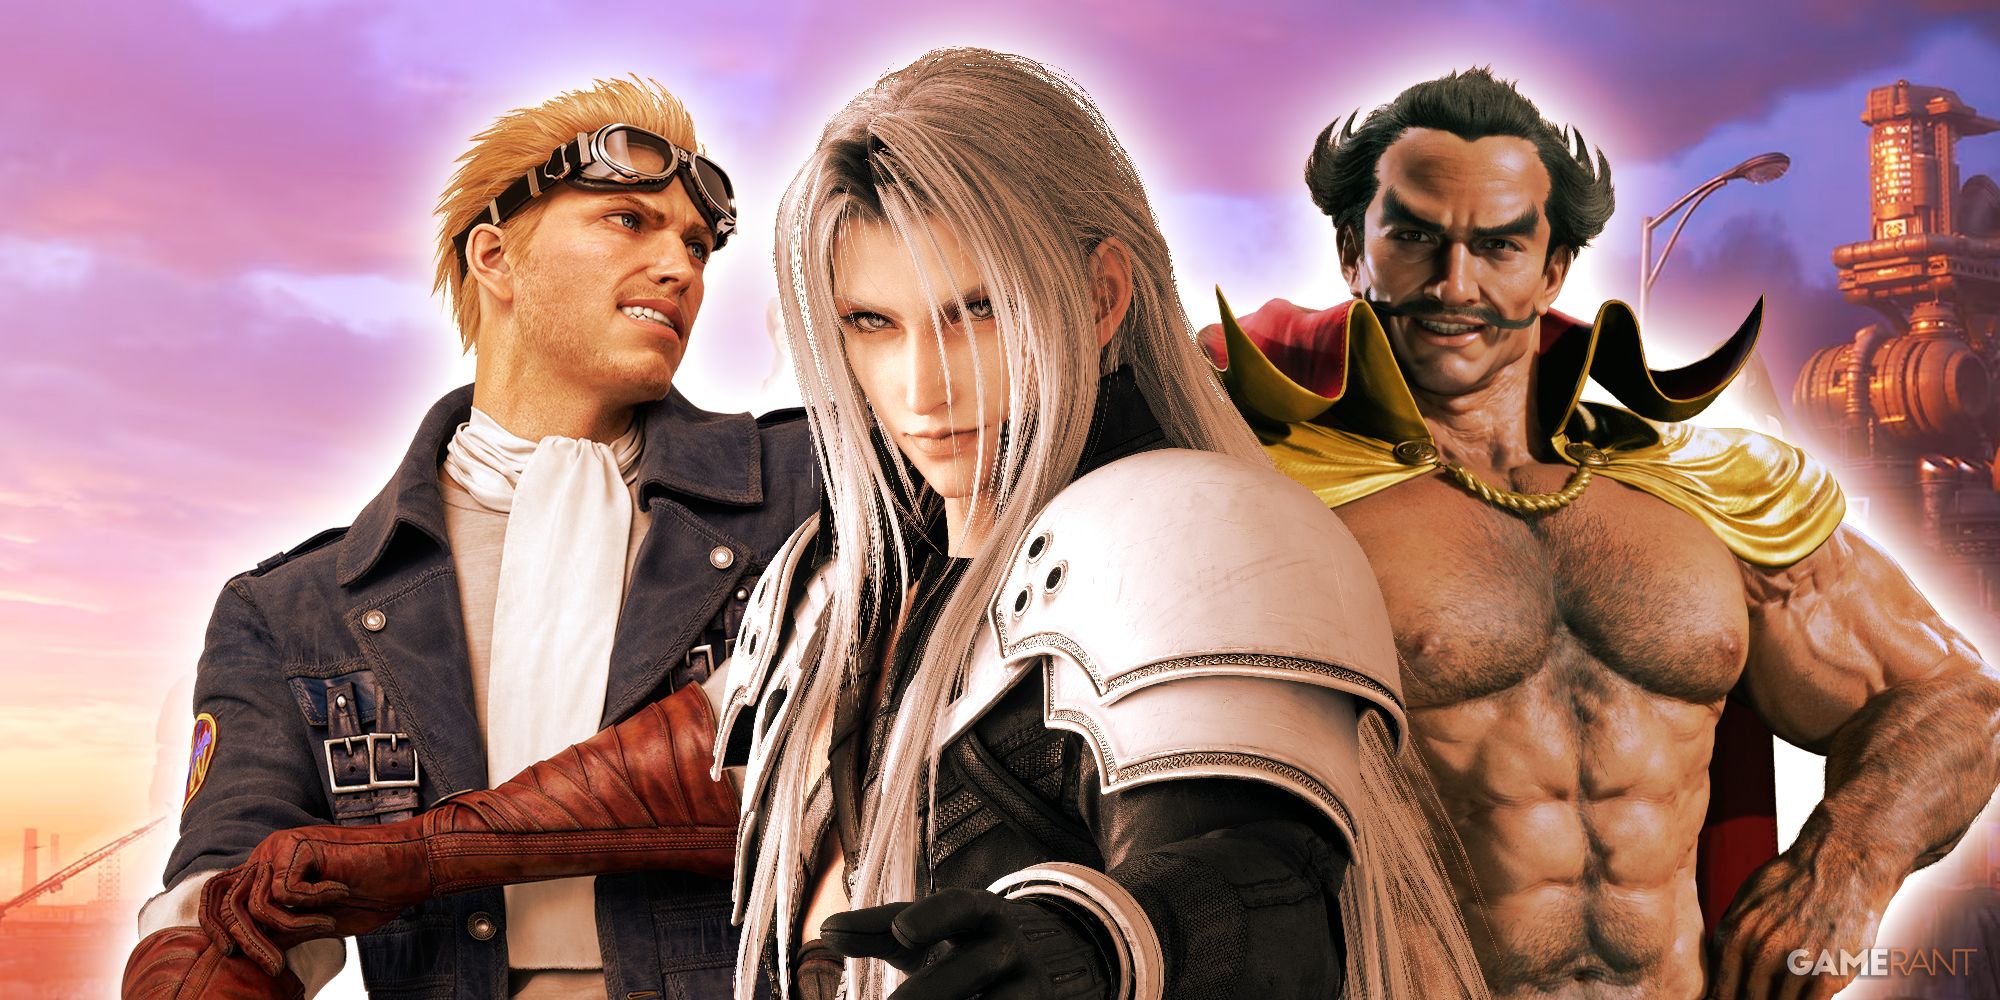 Final Fantasy 7 Remake Cid Highwind, Sephiroth, Dio